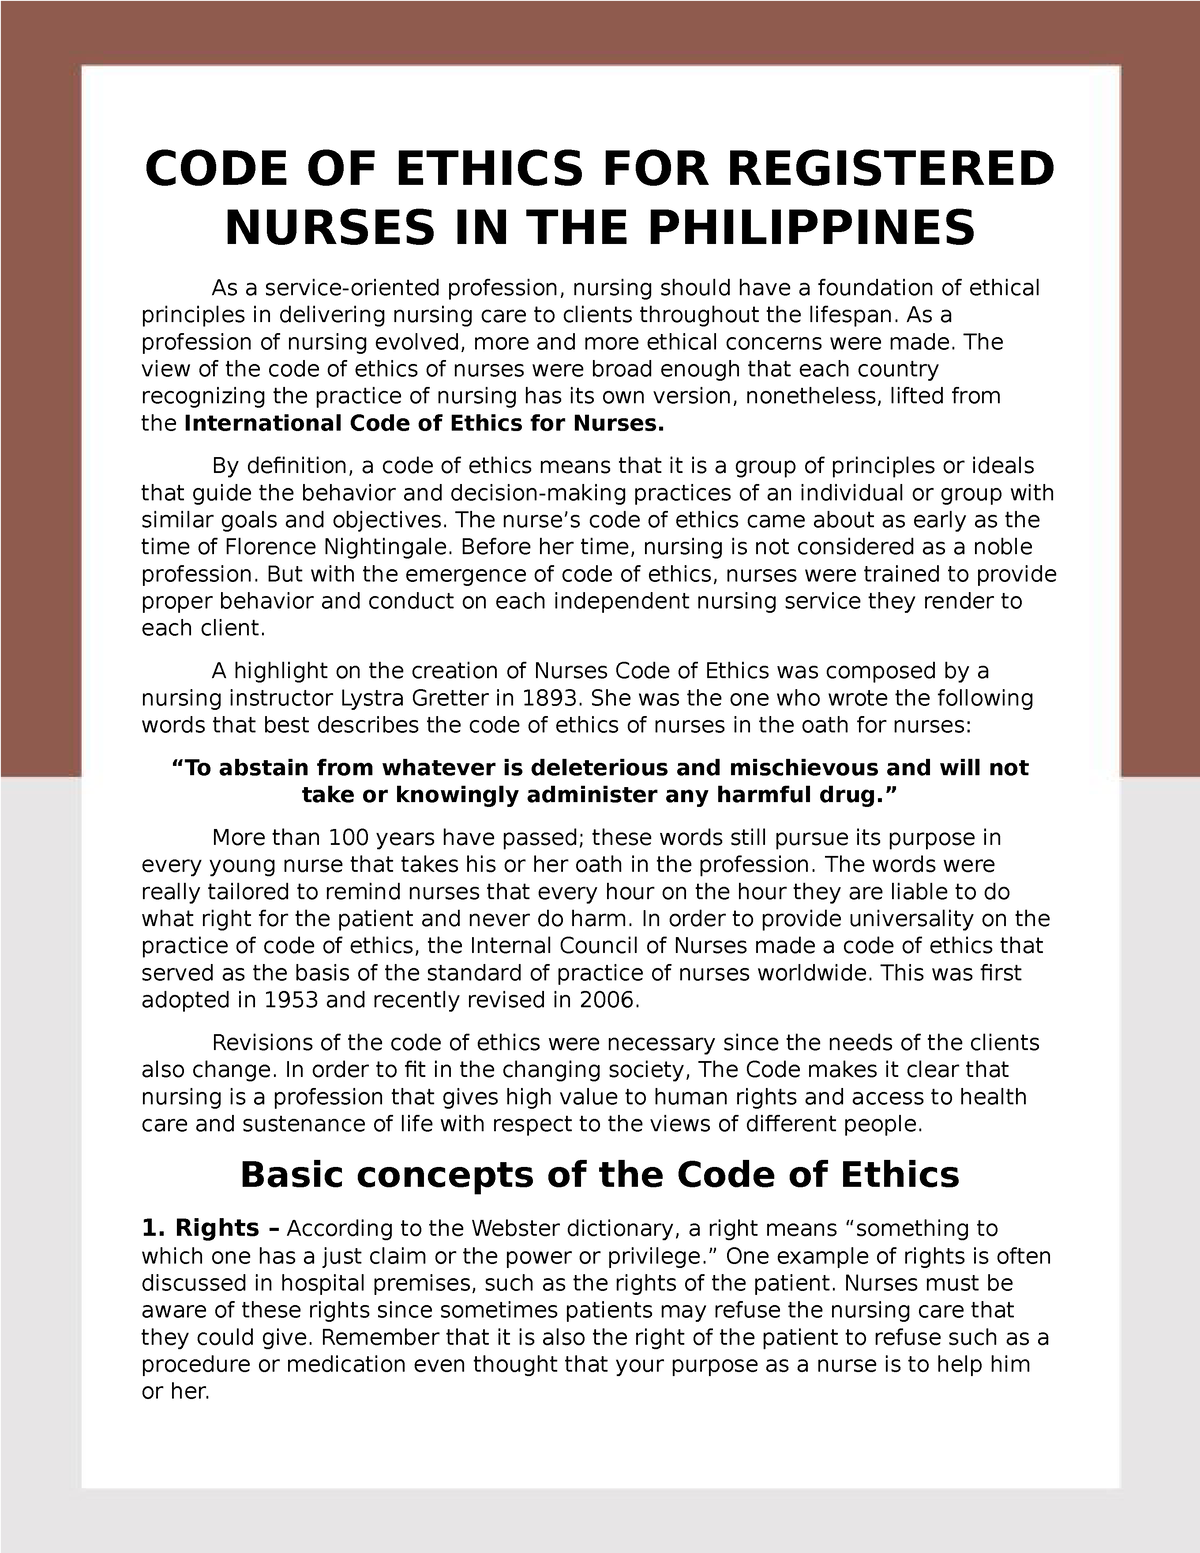 law and ethics nursing essay